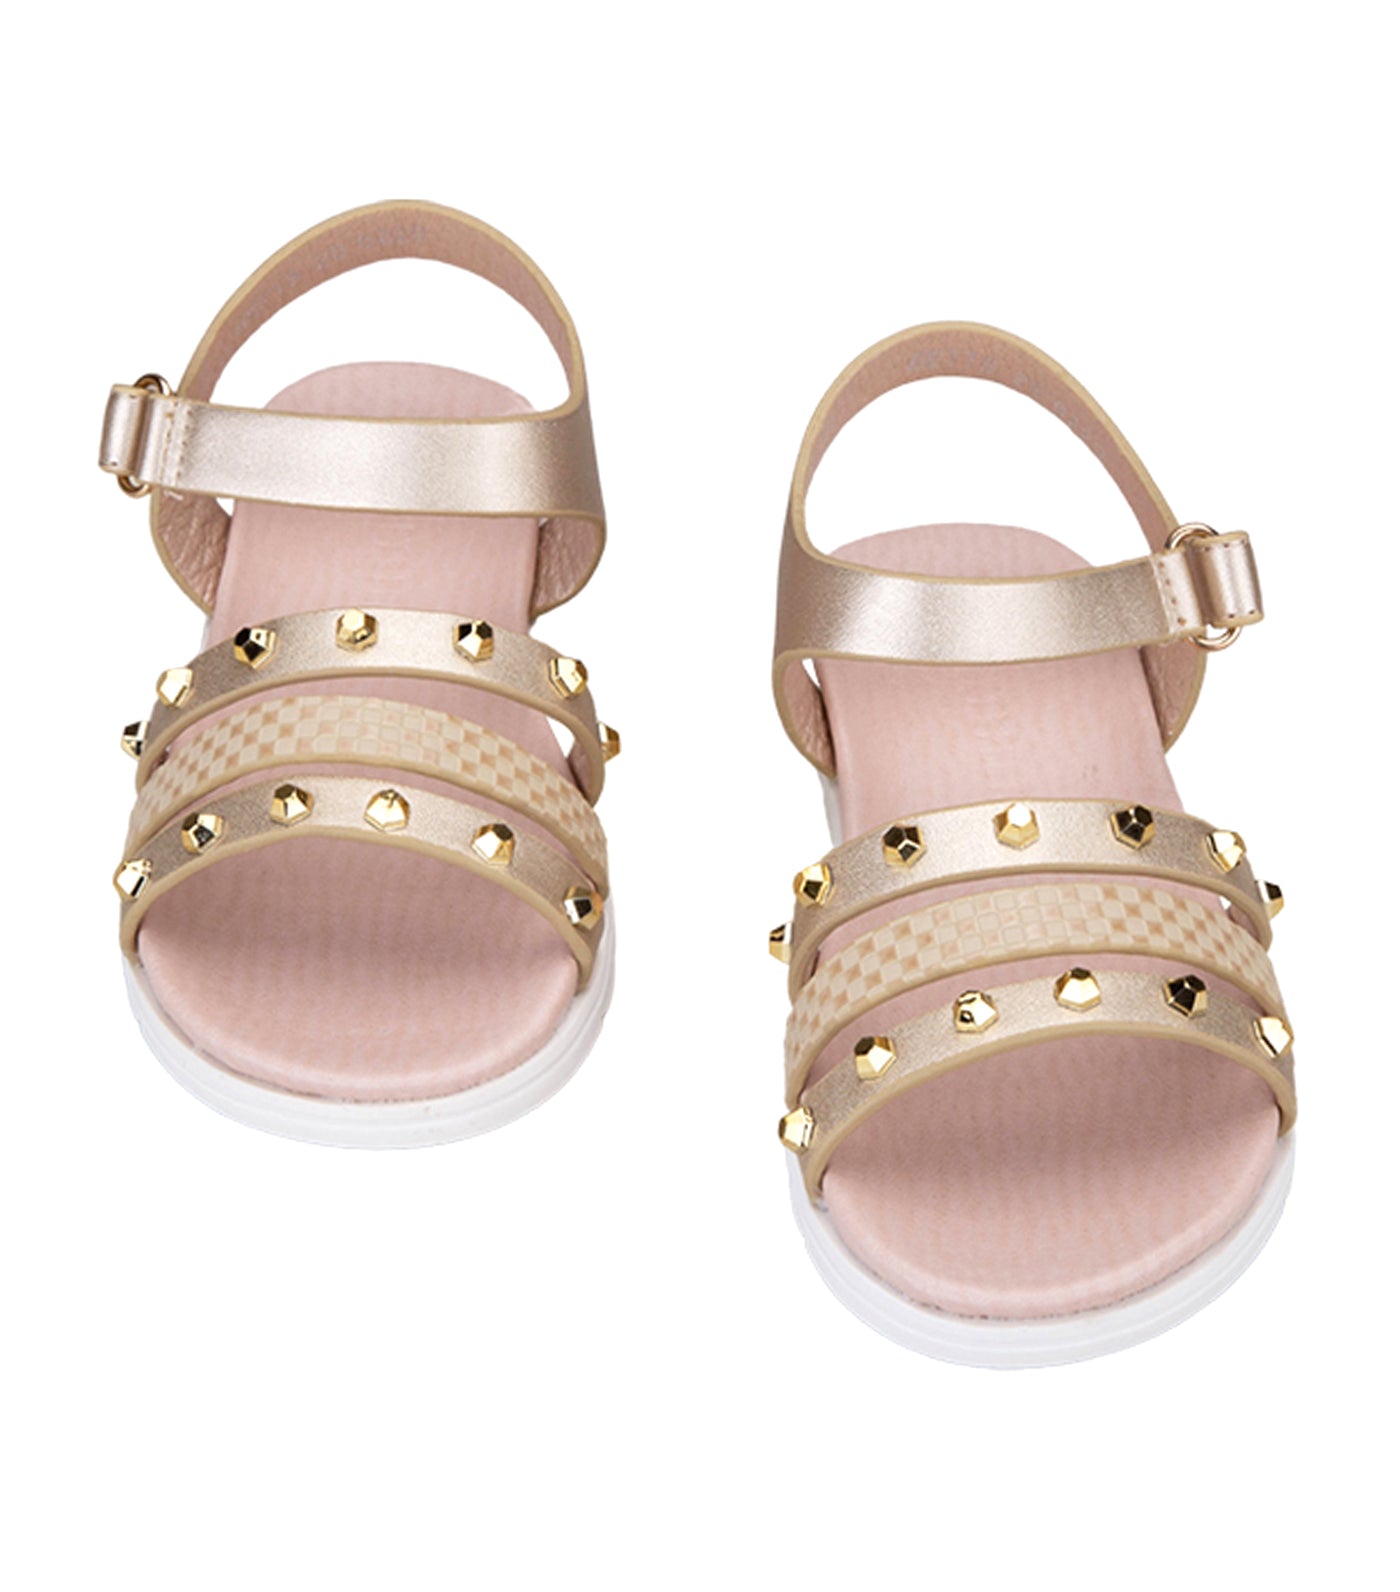 Betts Kids Sandals for Girls - Gold